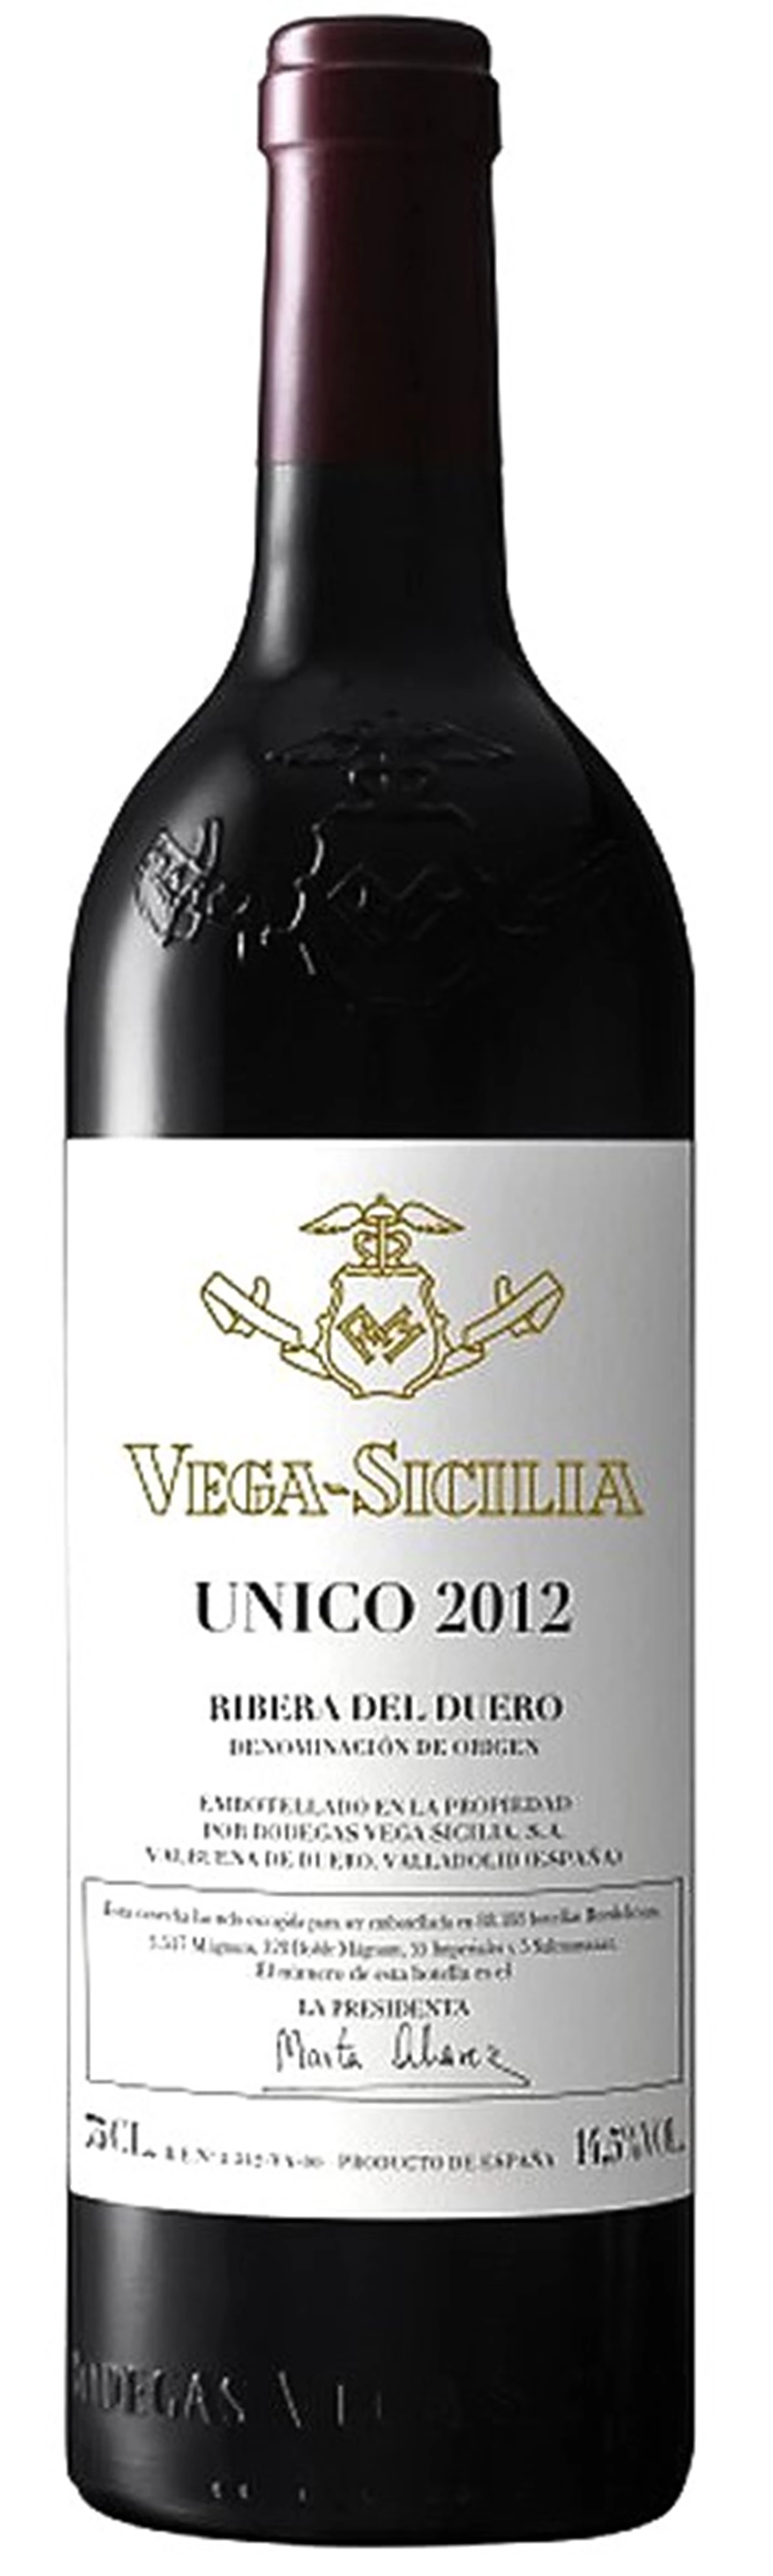 Vega-Sicilia_Unico-2012_Ribera-del-Duero